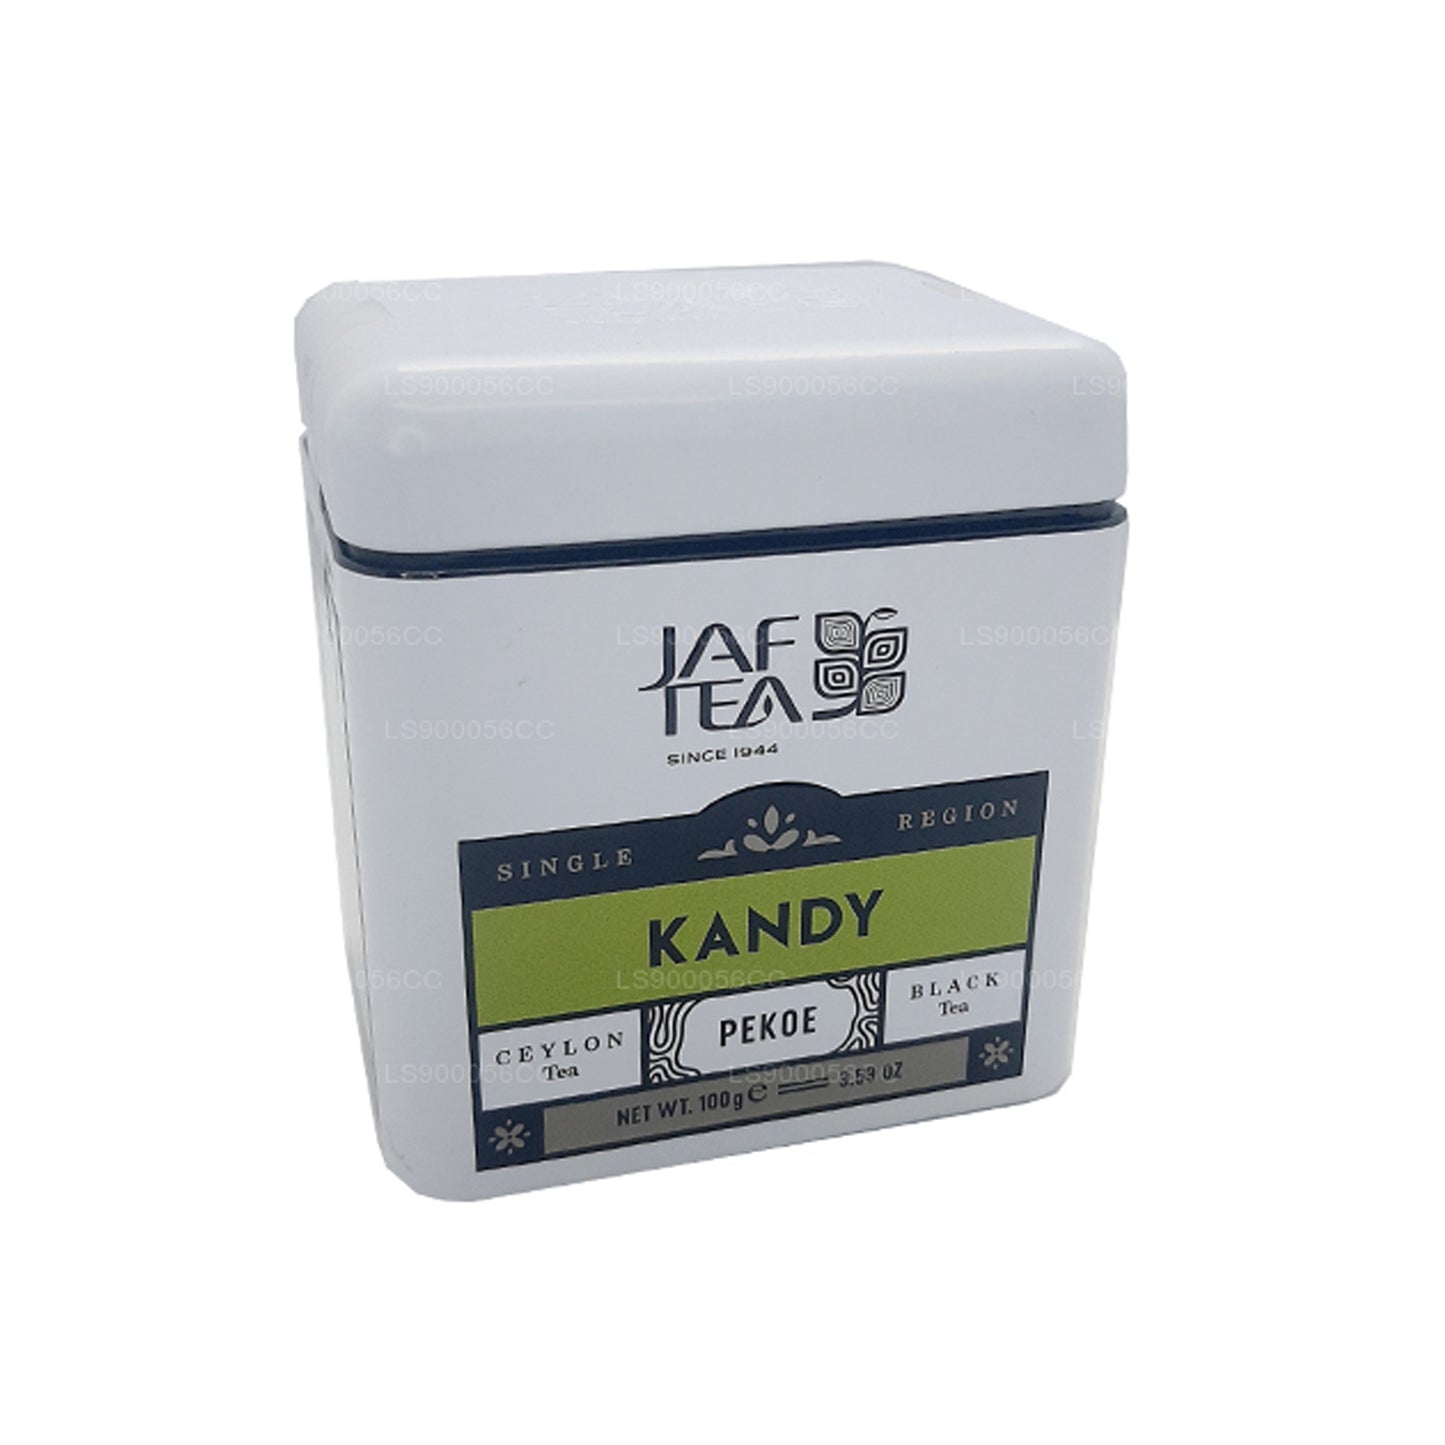 Boîte à thé Jaf Single Region Collection Kandy PEKOE (100 g)